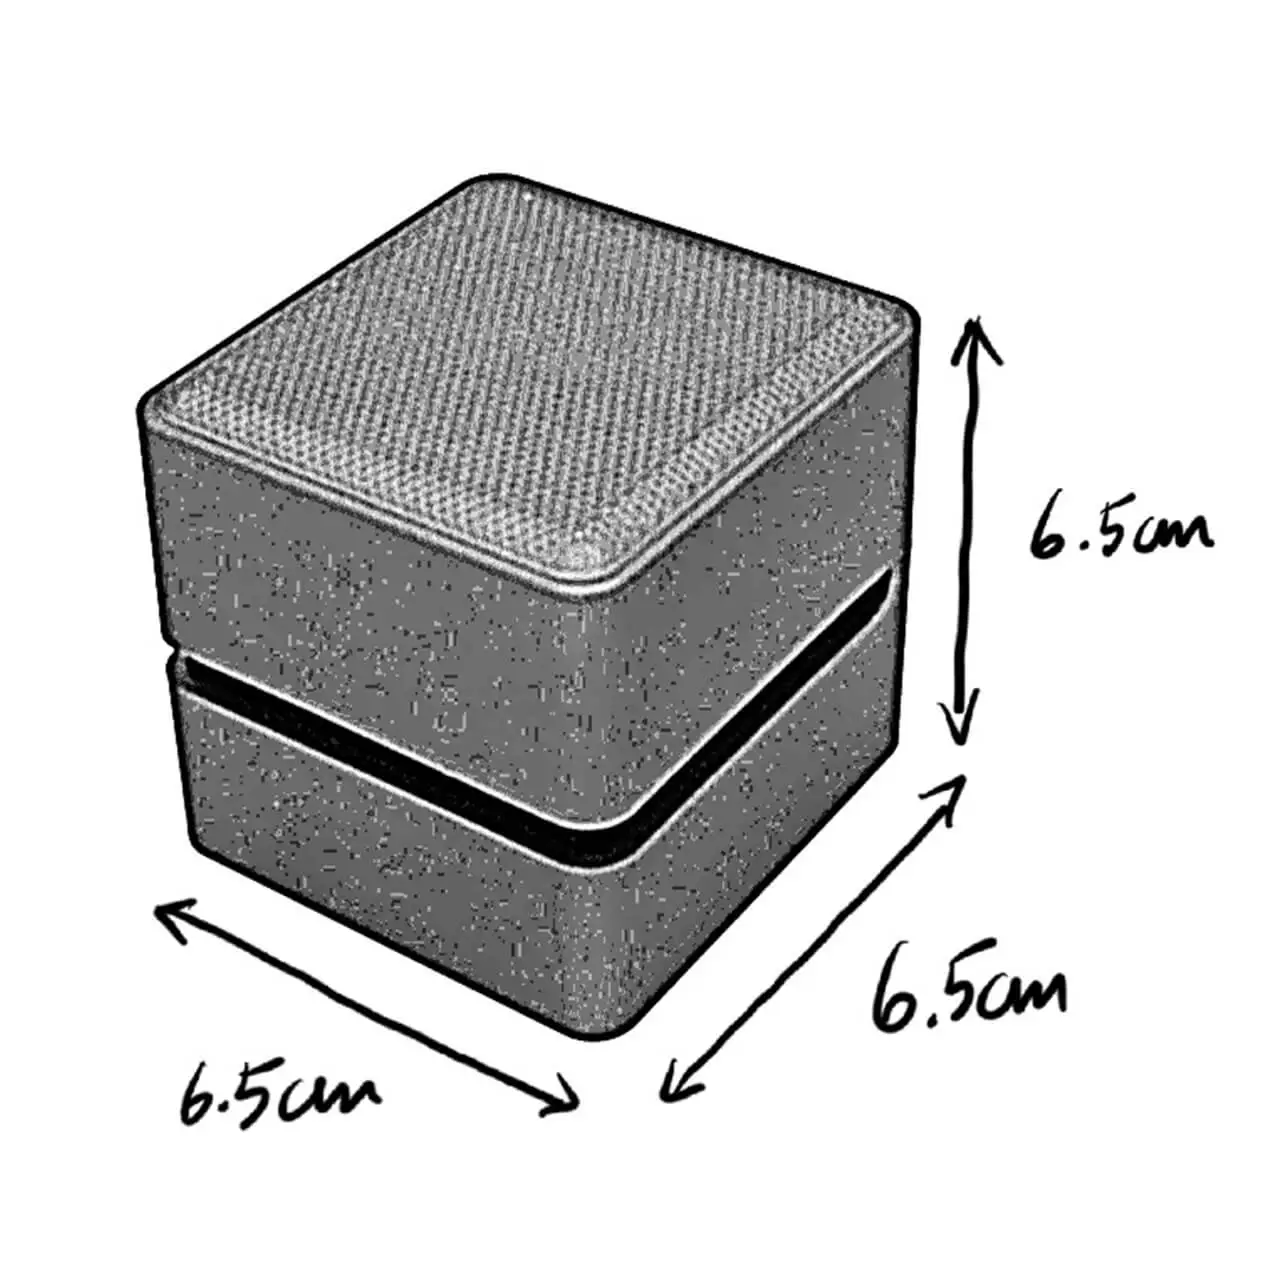 arlo ring box dimensions